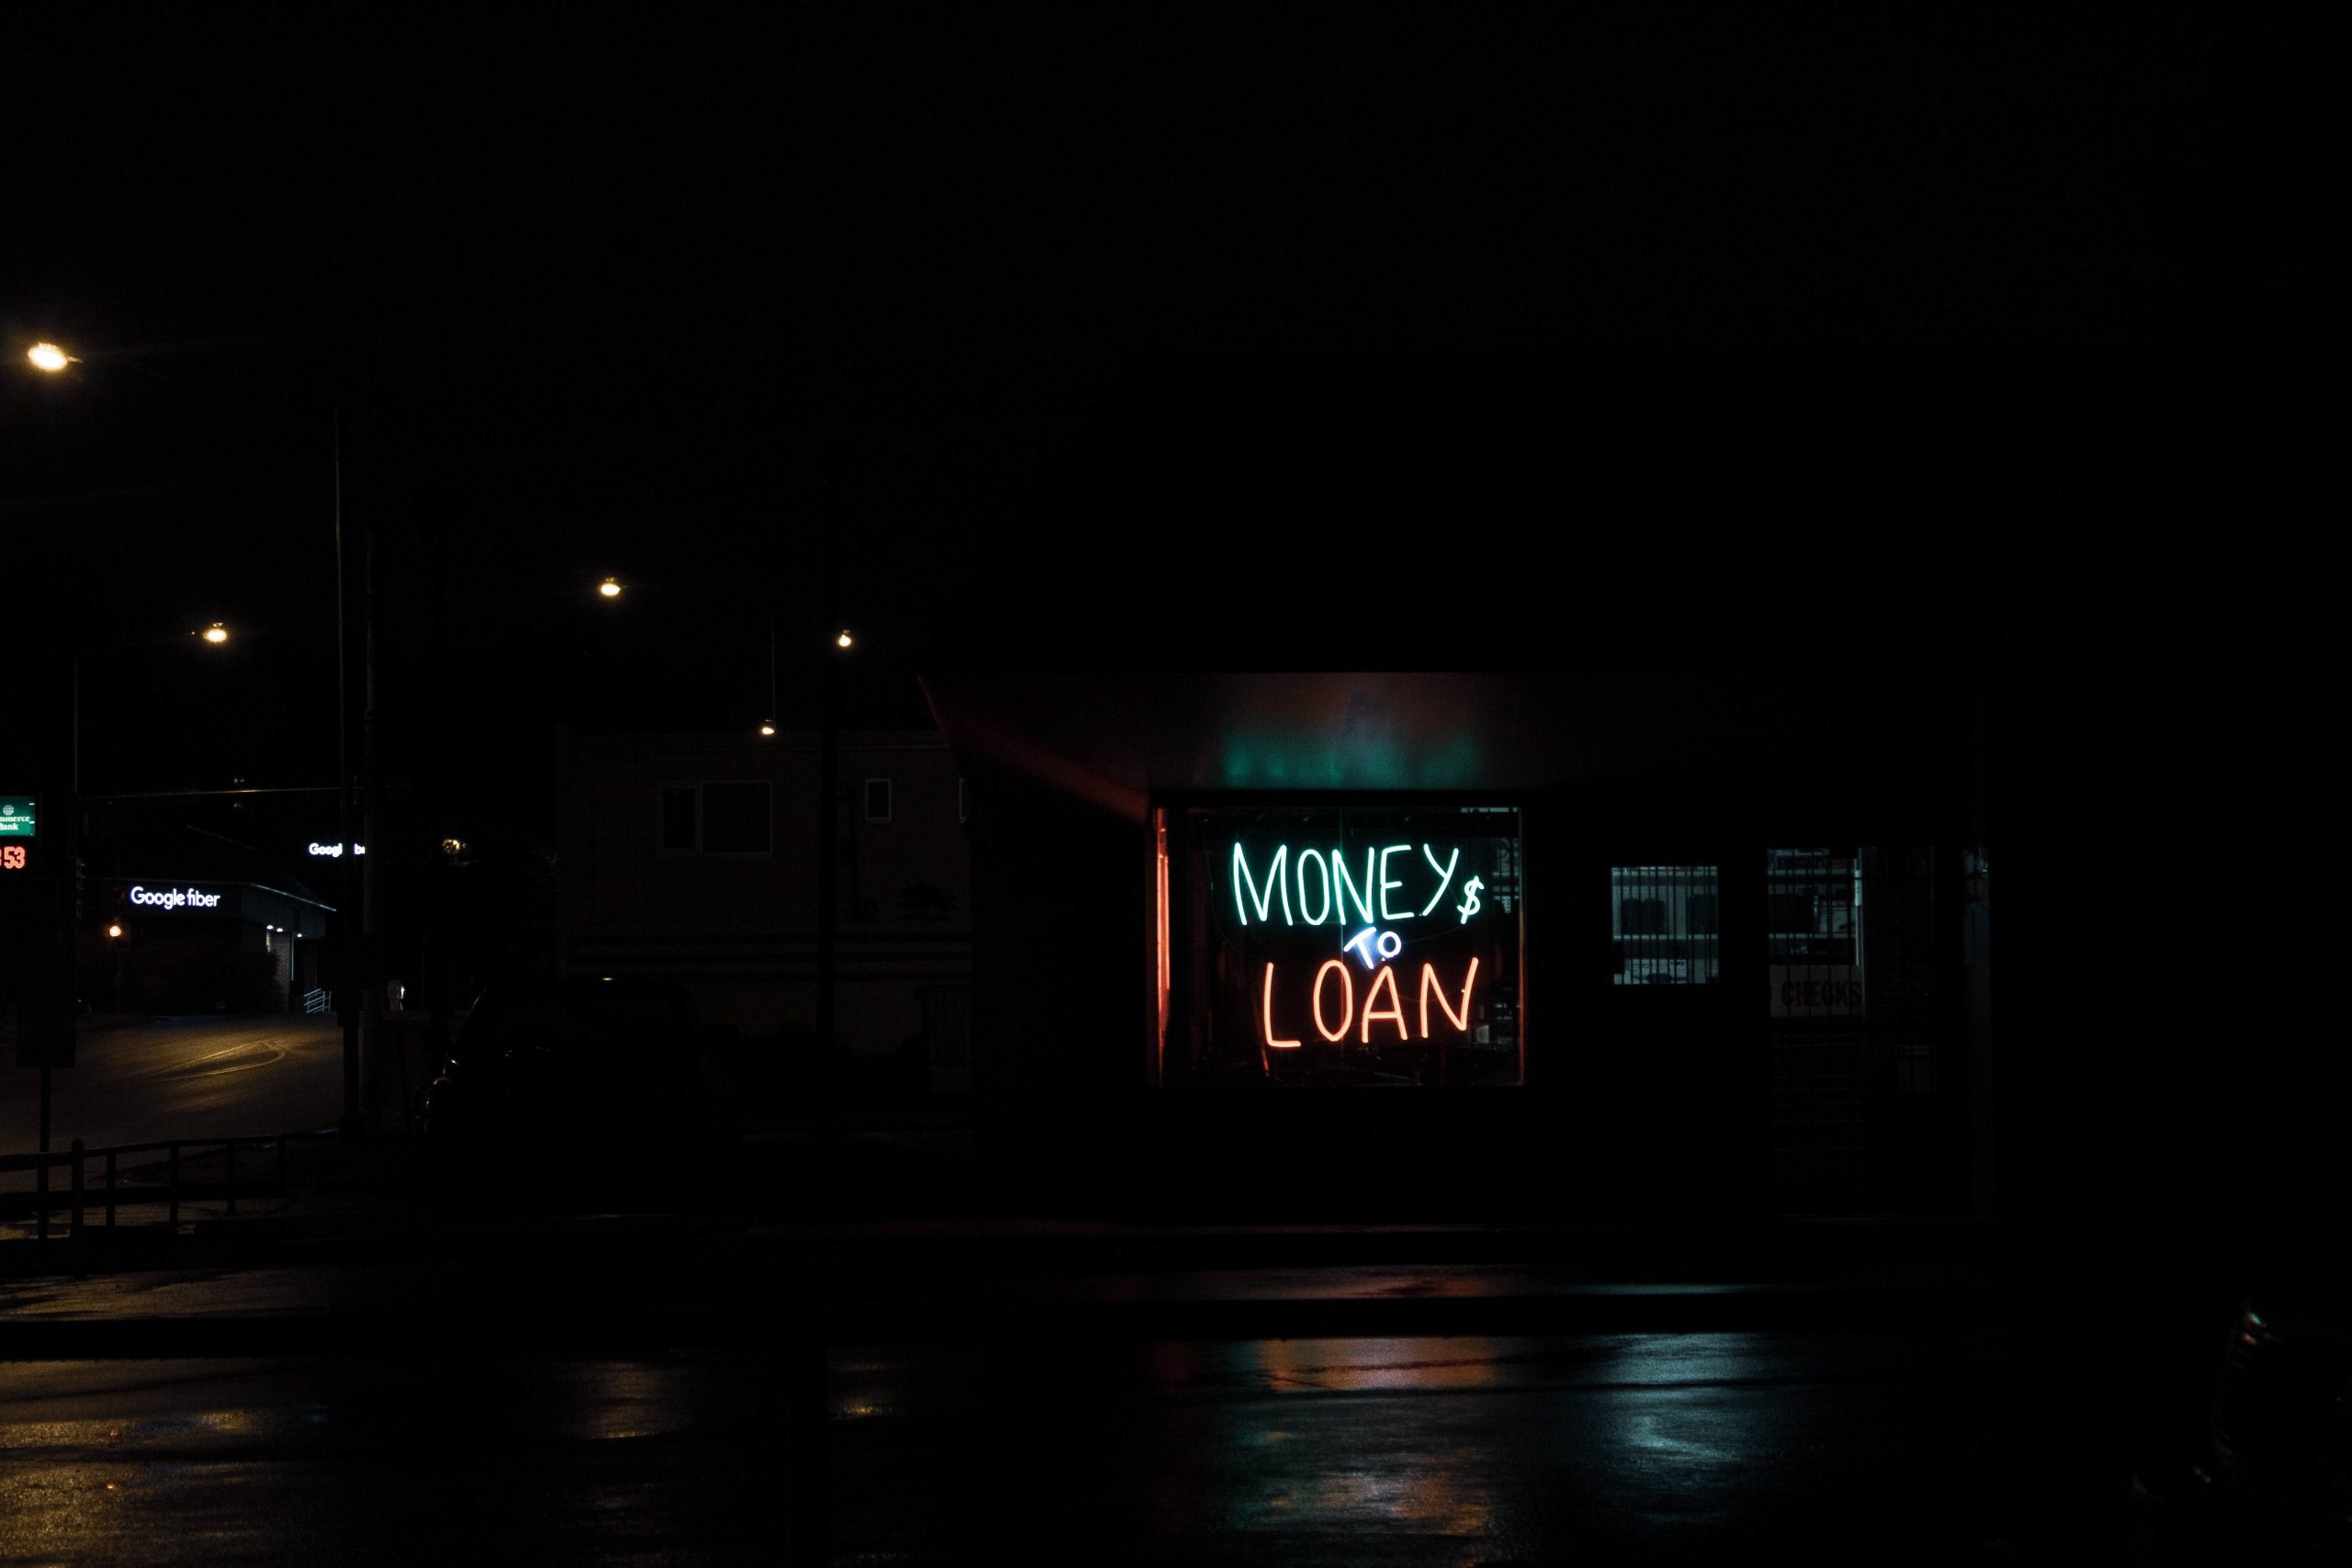 money to loan image